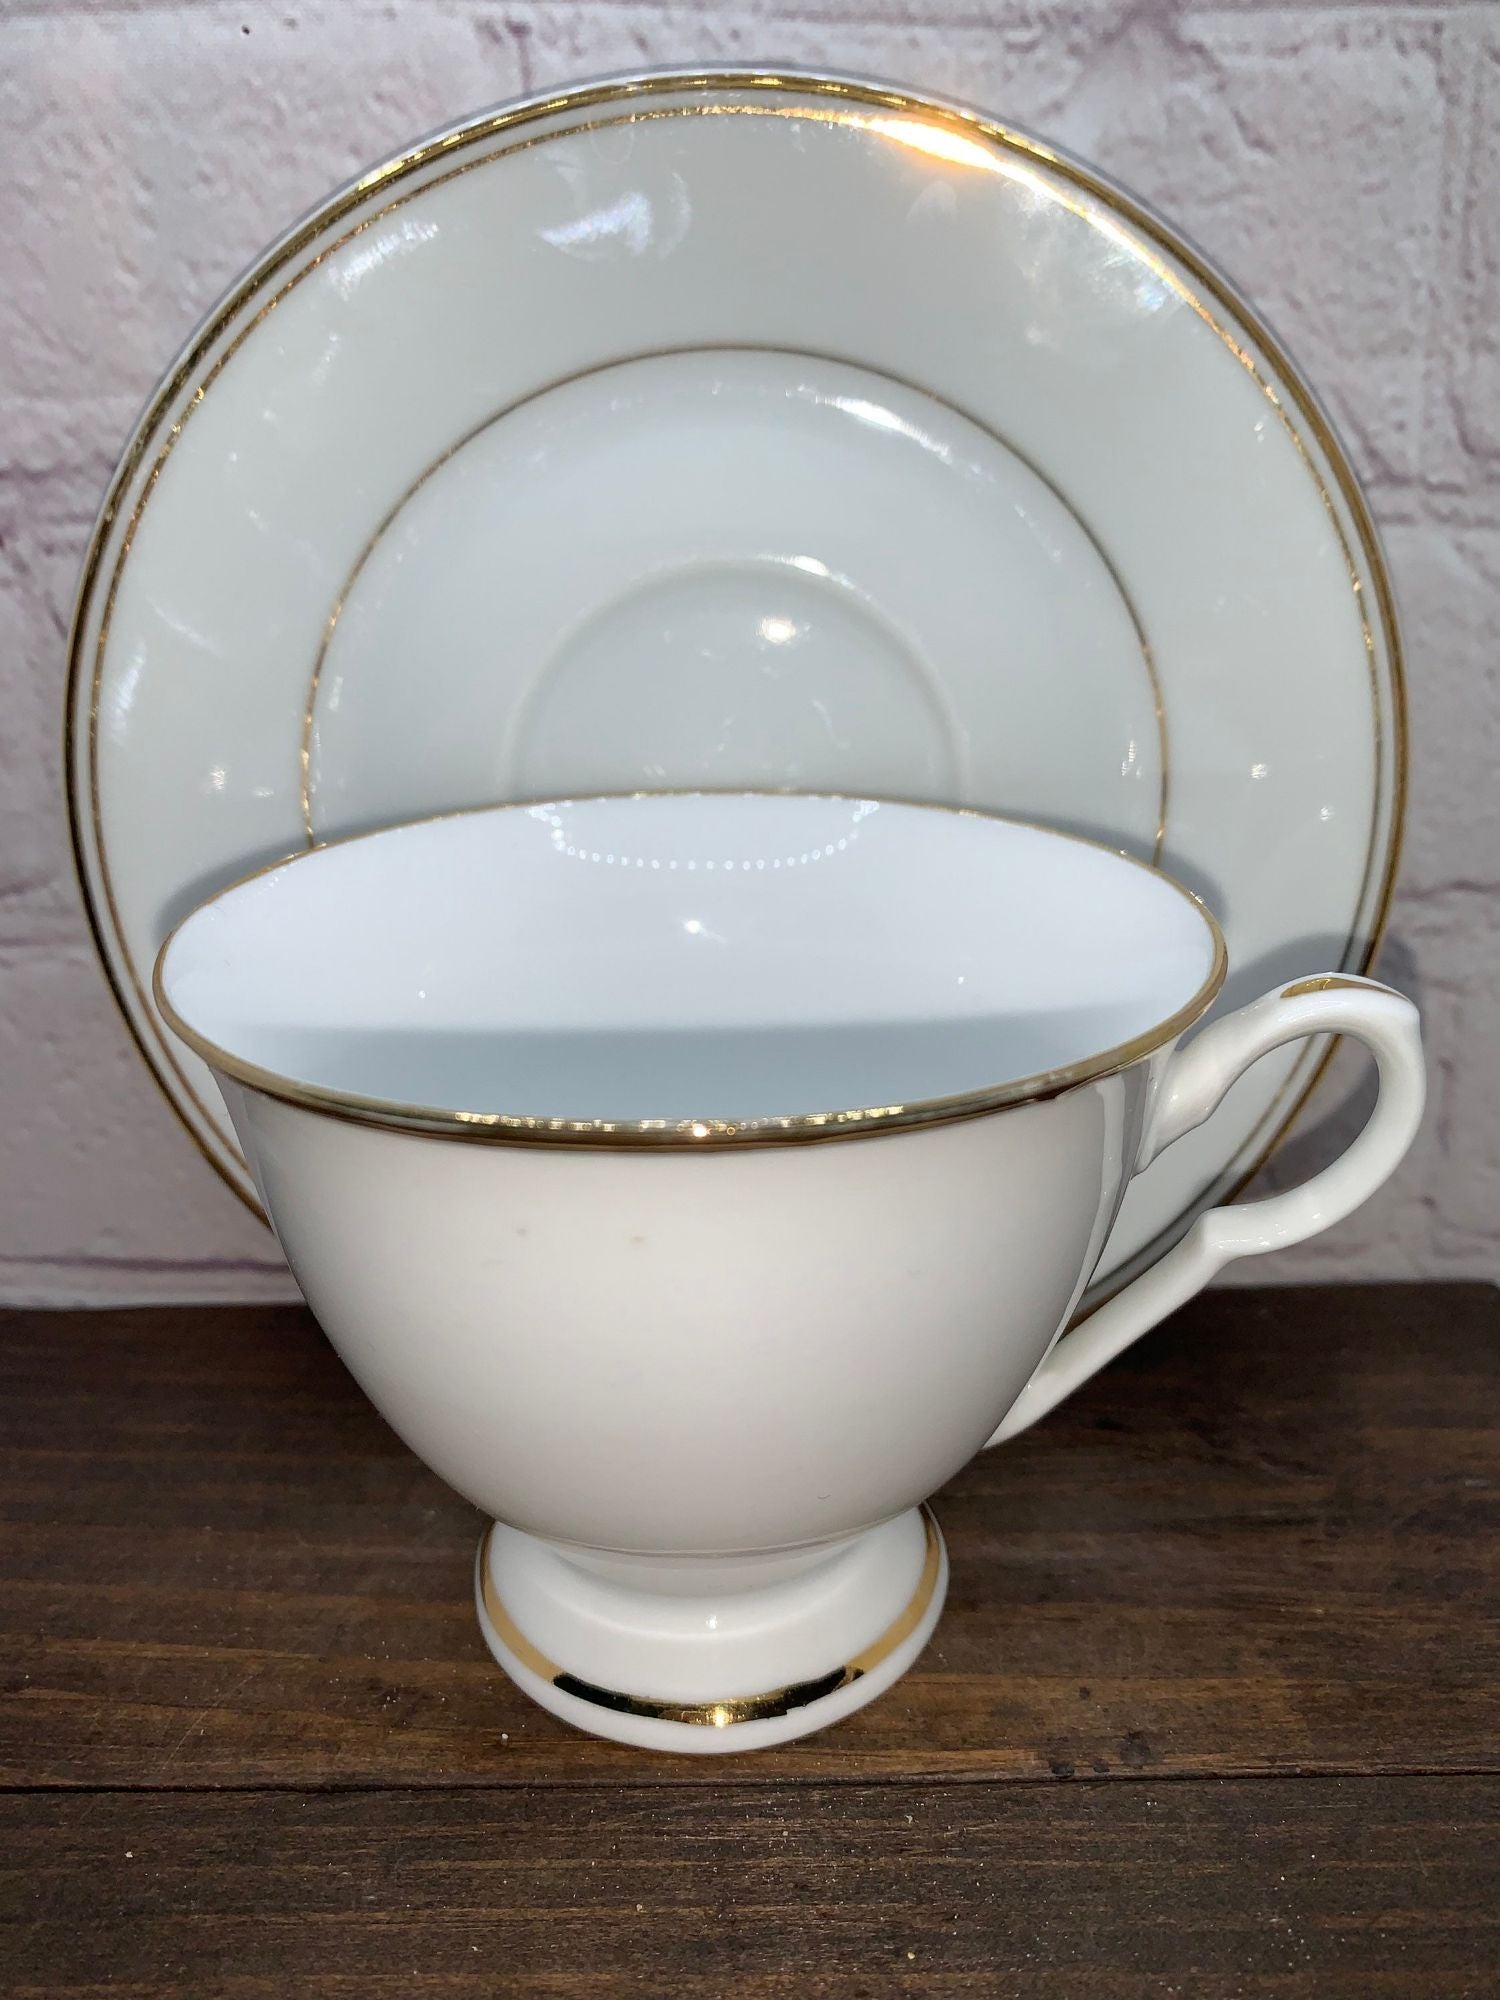 Vintage Royal Albert Saucer & China Tea Cup, Bone China, Gold Trim-Japan/China-1950s